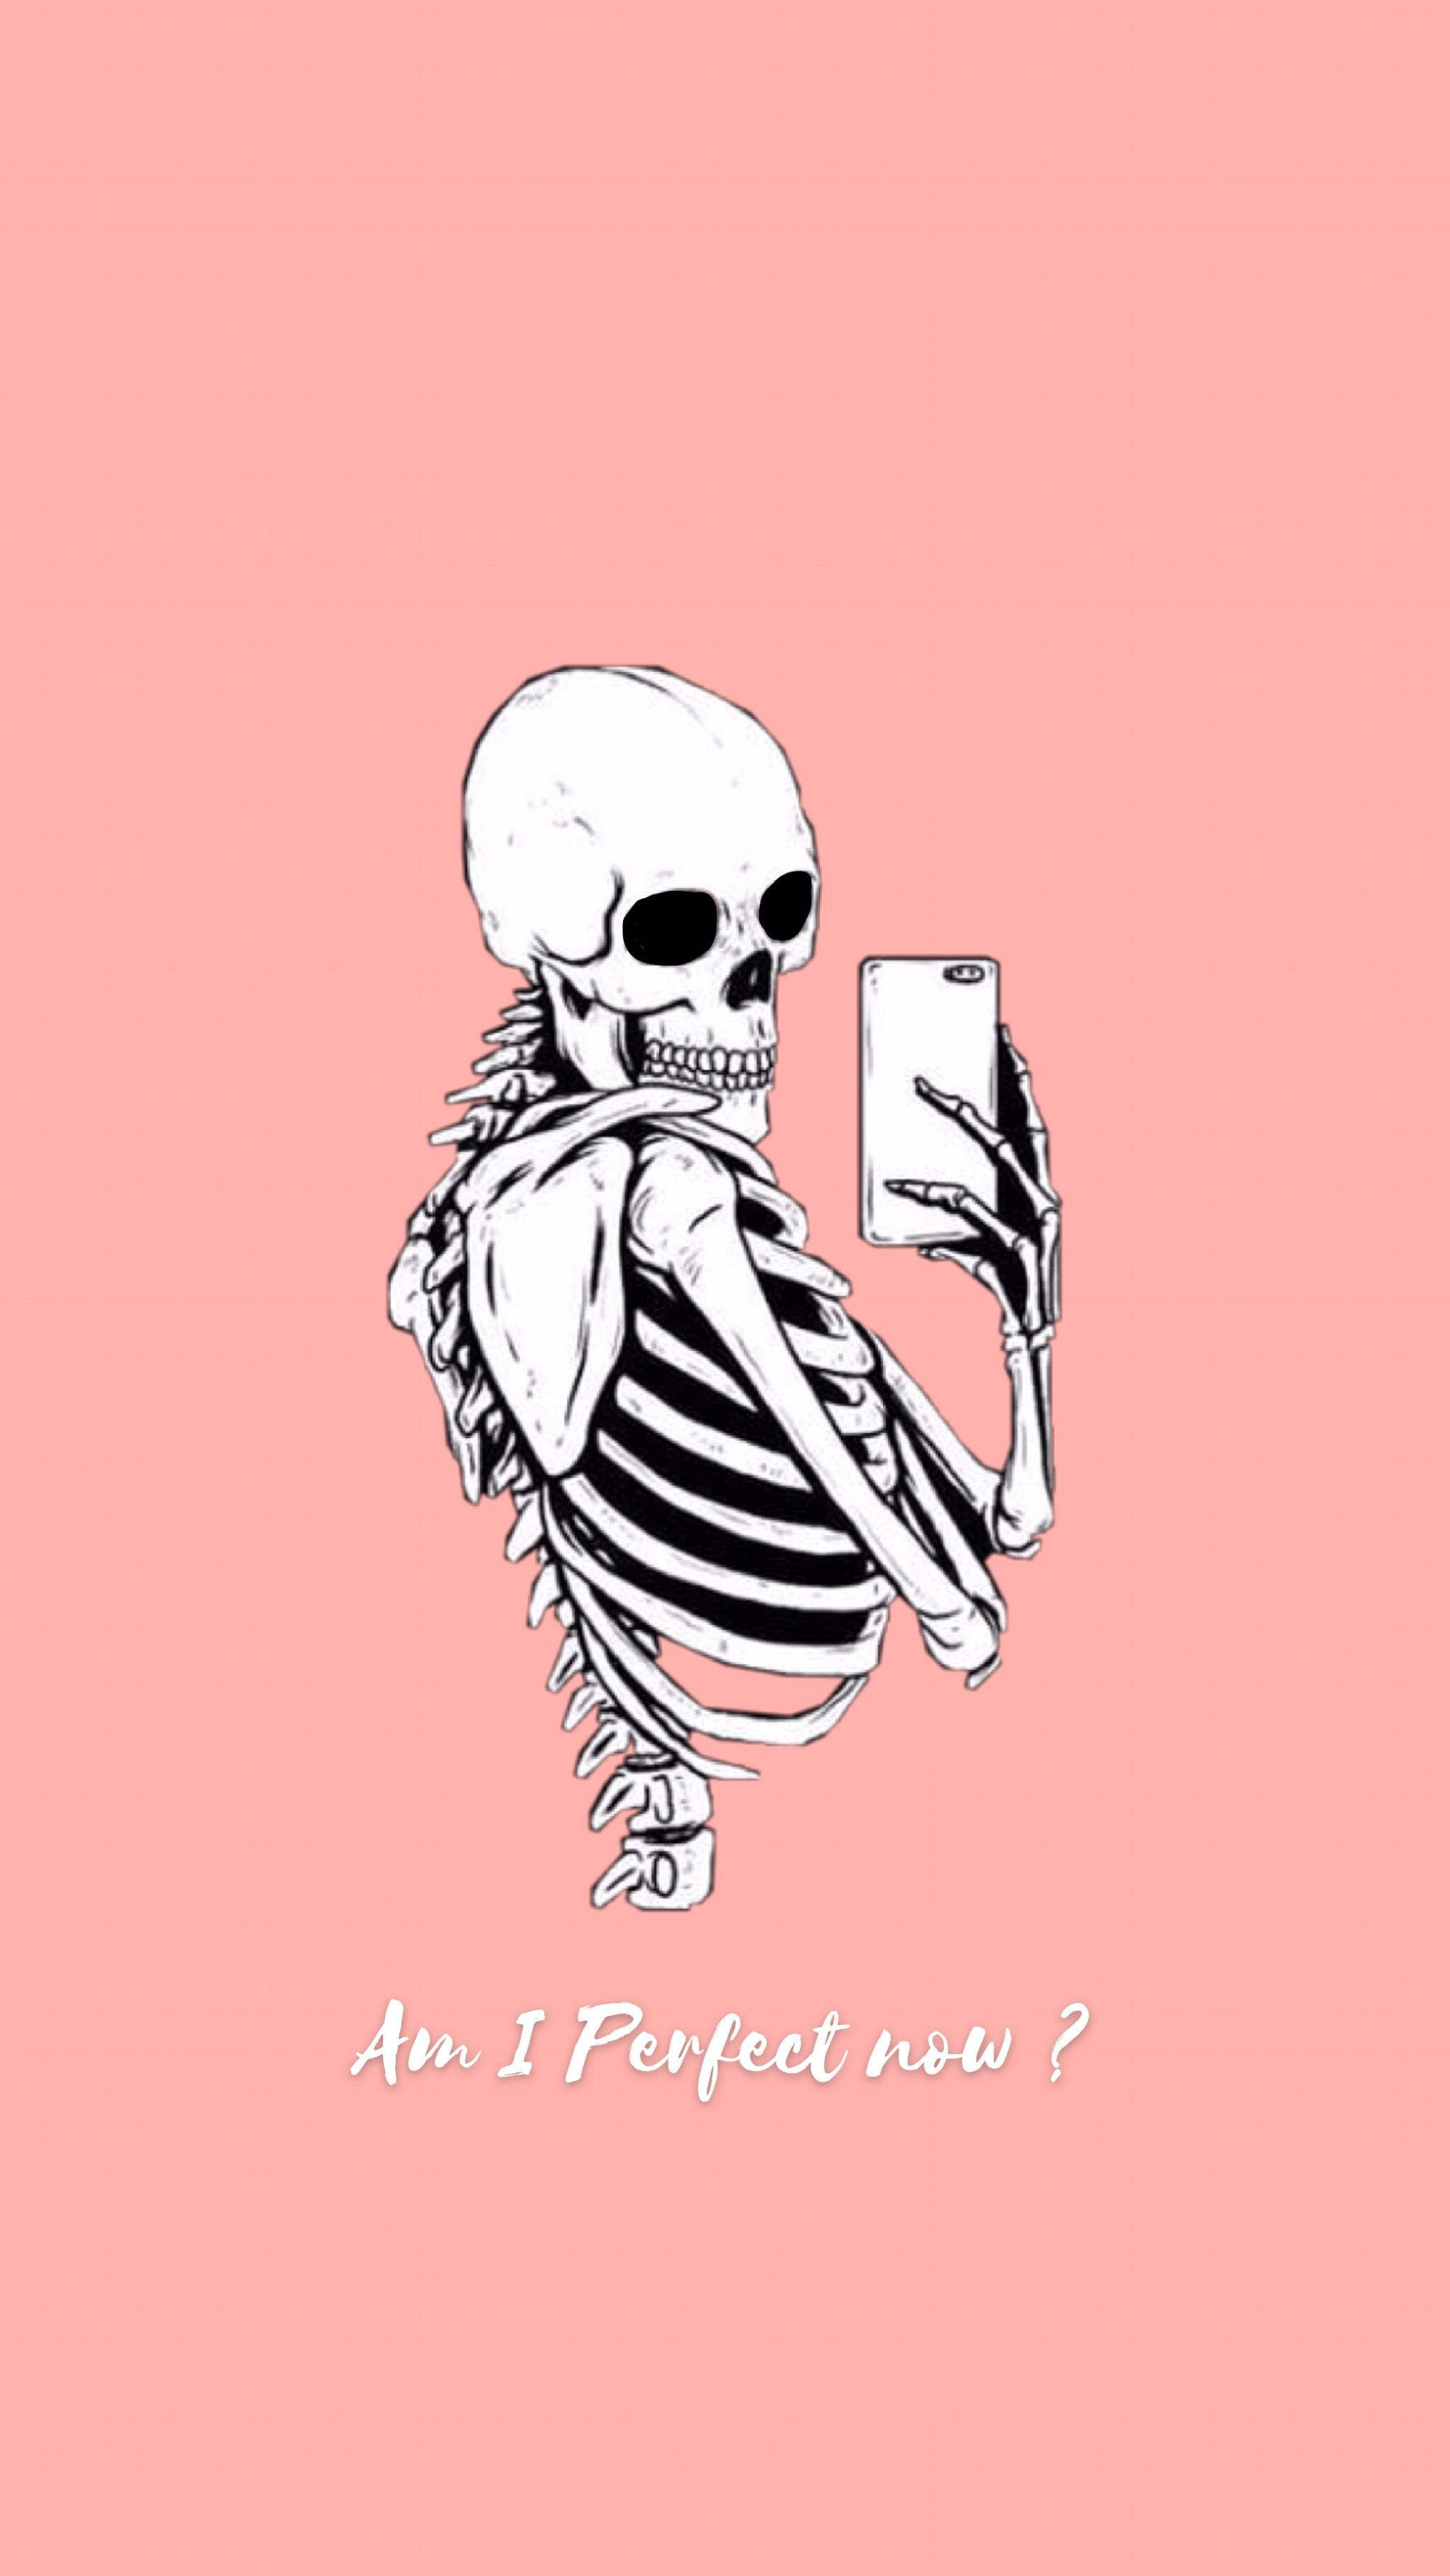 Free Skeleton Aesthetic Wallpaper Downloads, [200+] Skeleton Aesthetic  Wallpapers for FREE 